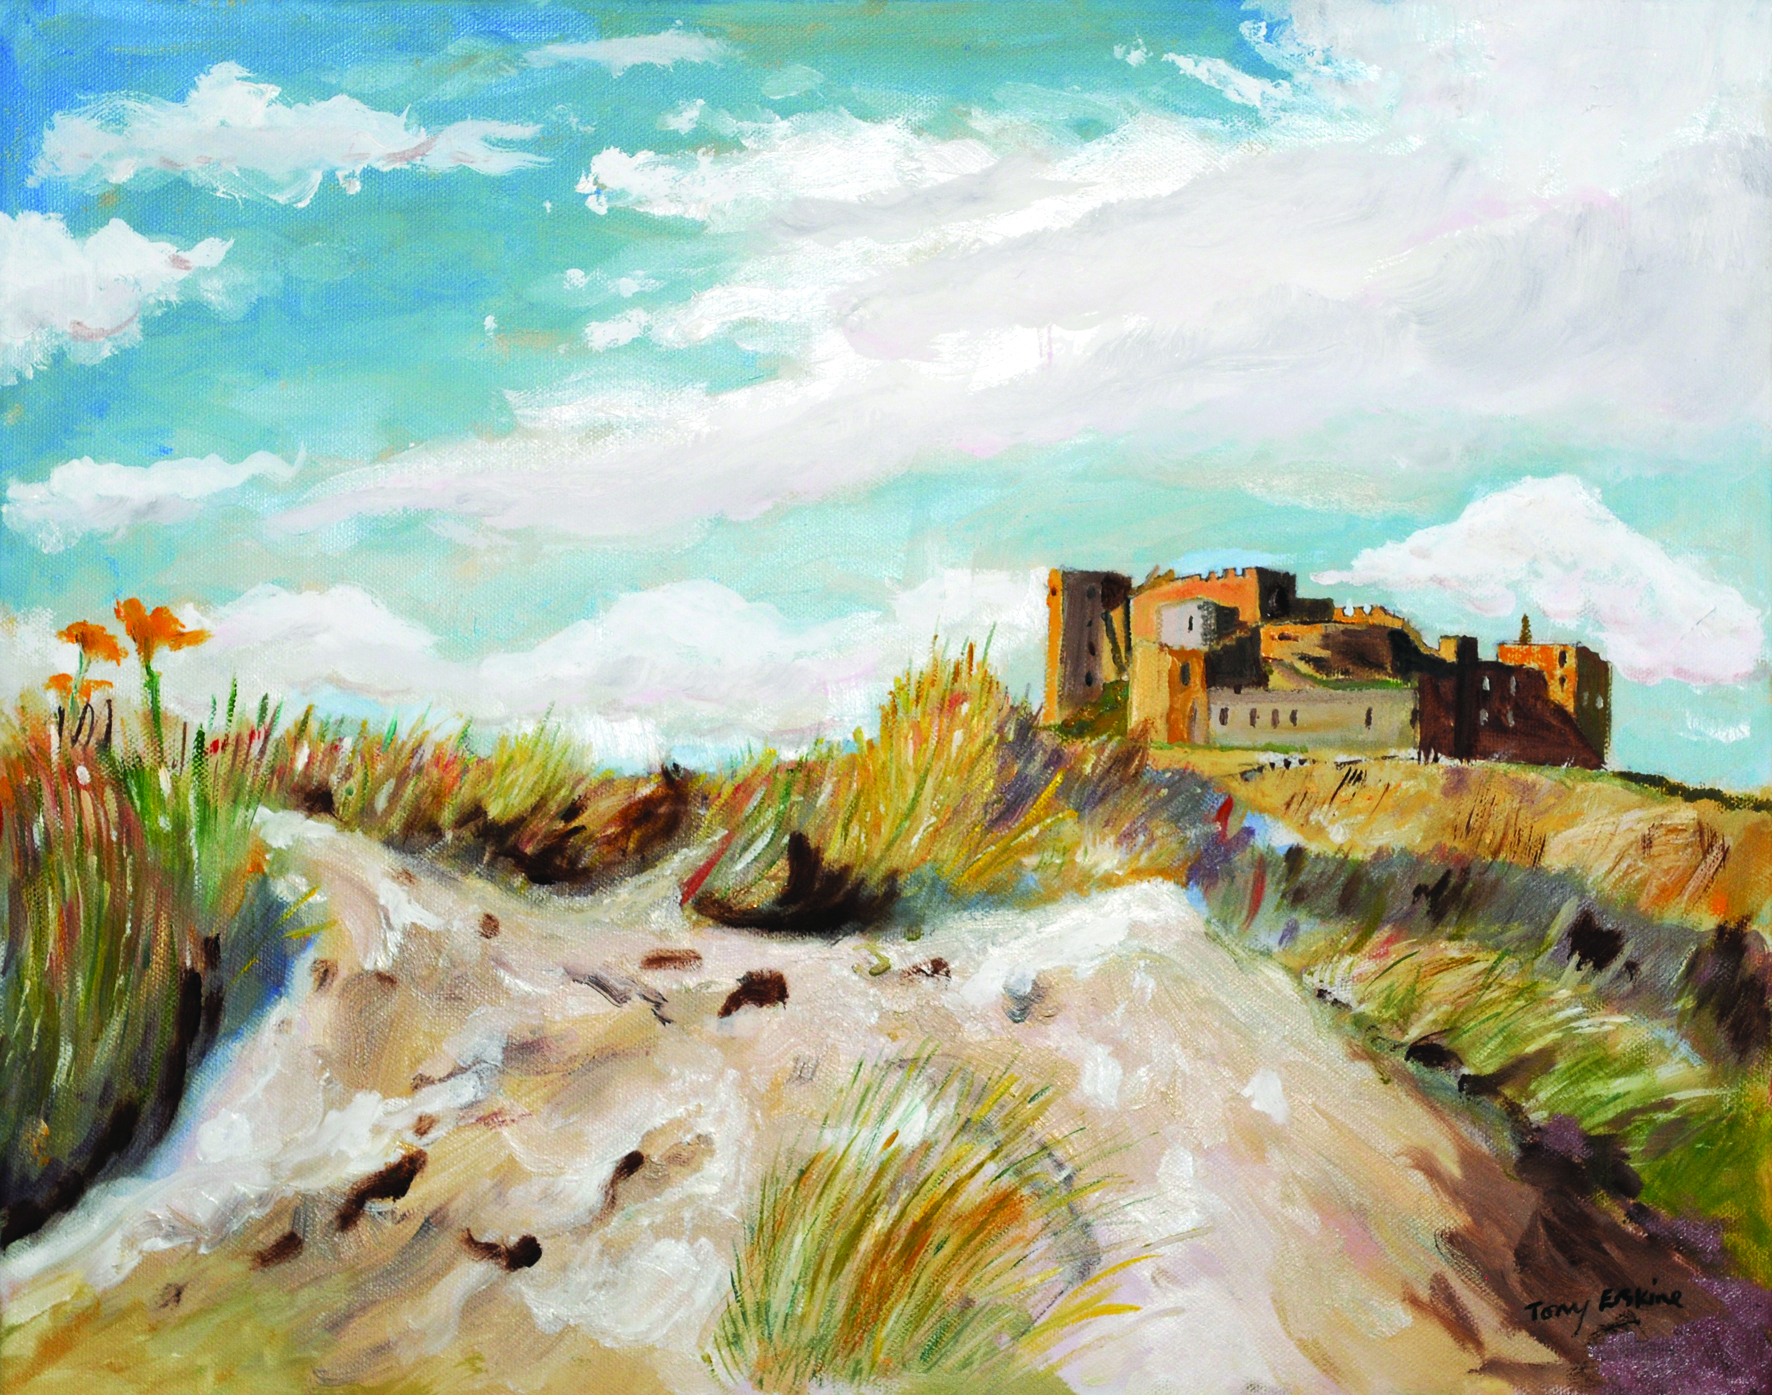  Bamburgh Castle  Oil on canvas, framed  50 x 40cm 